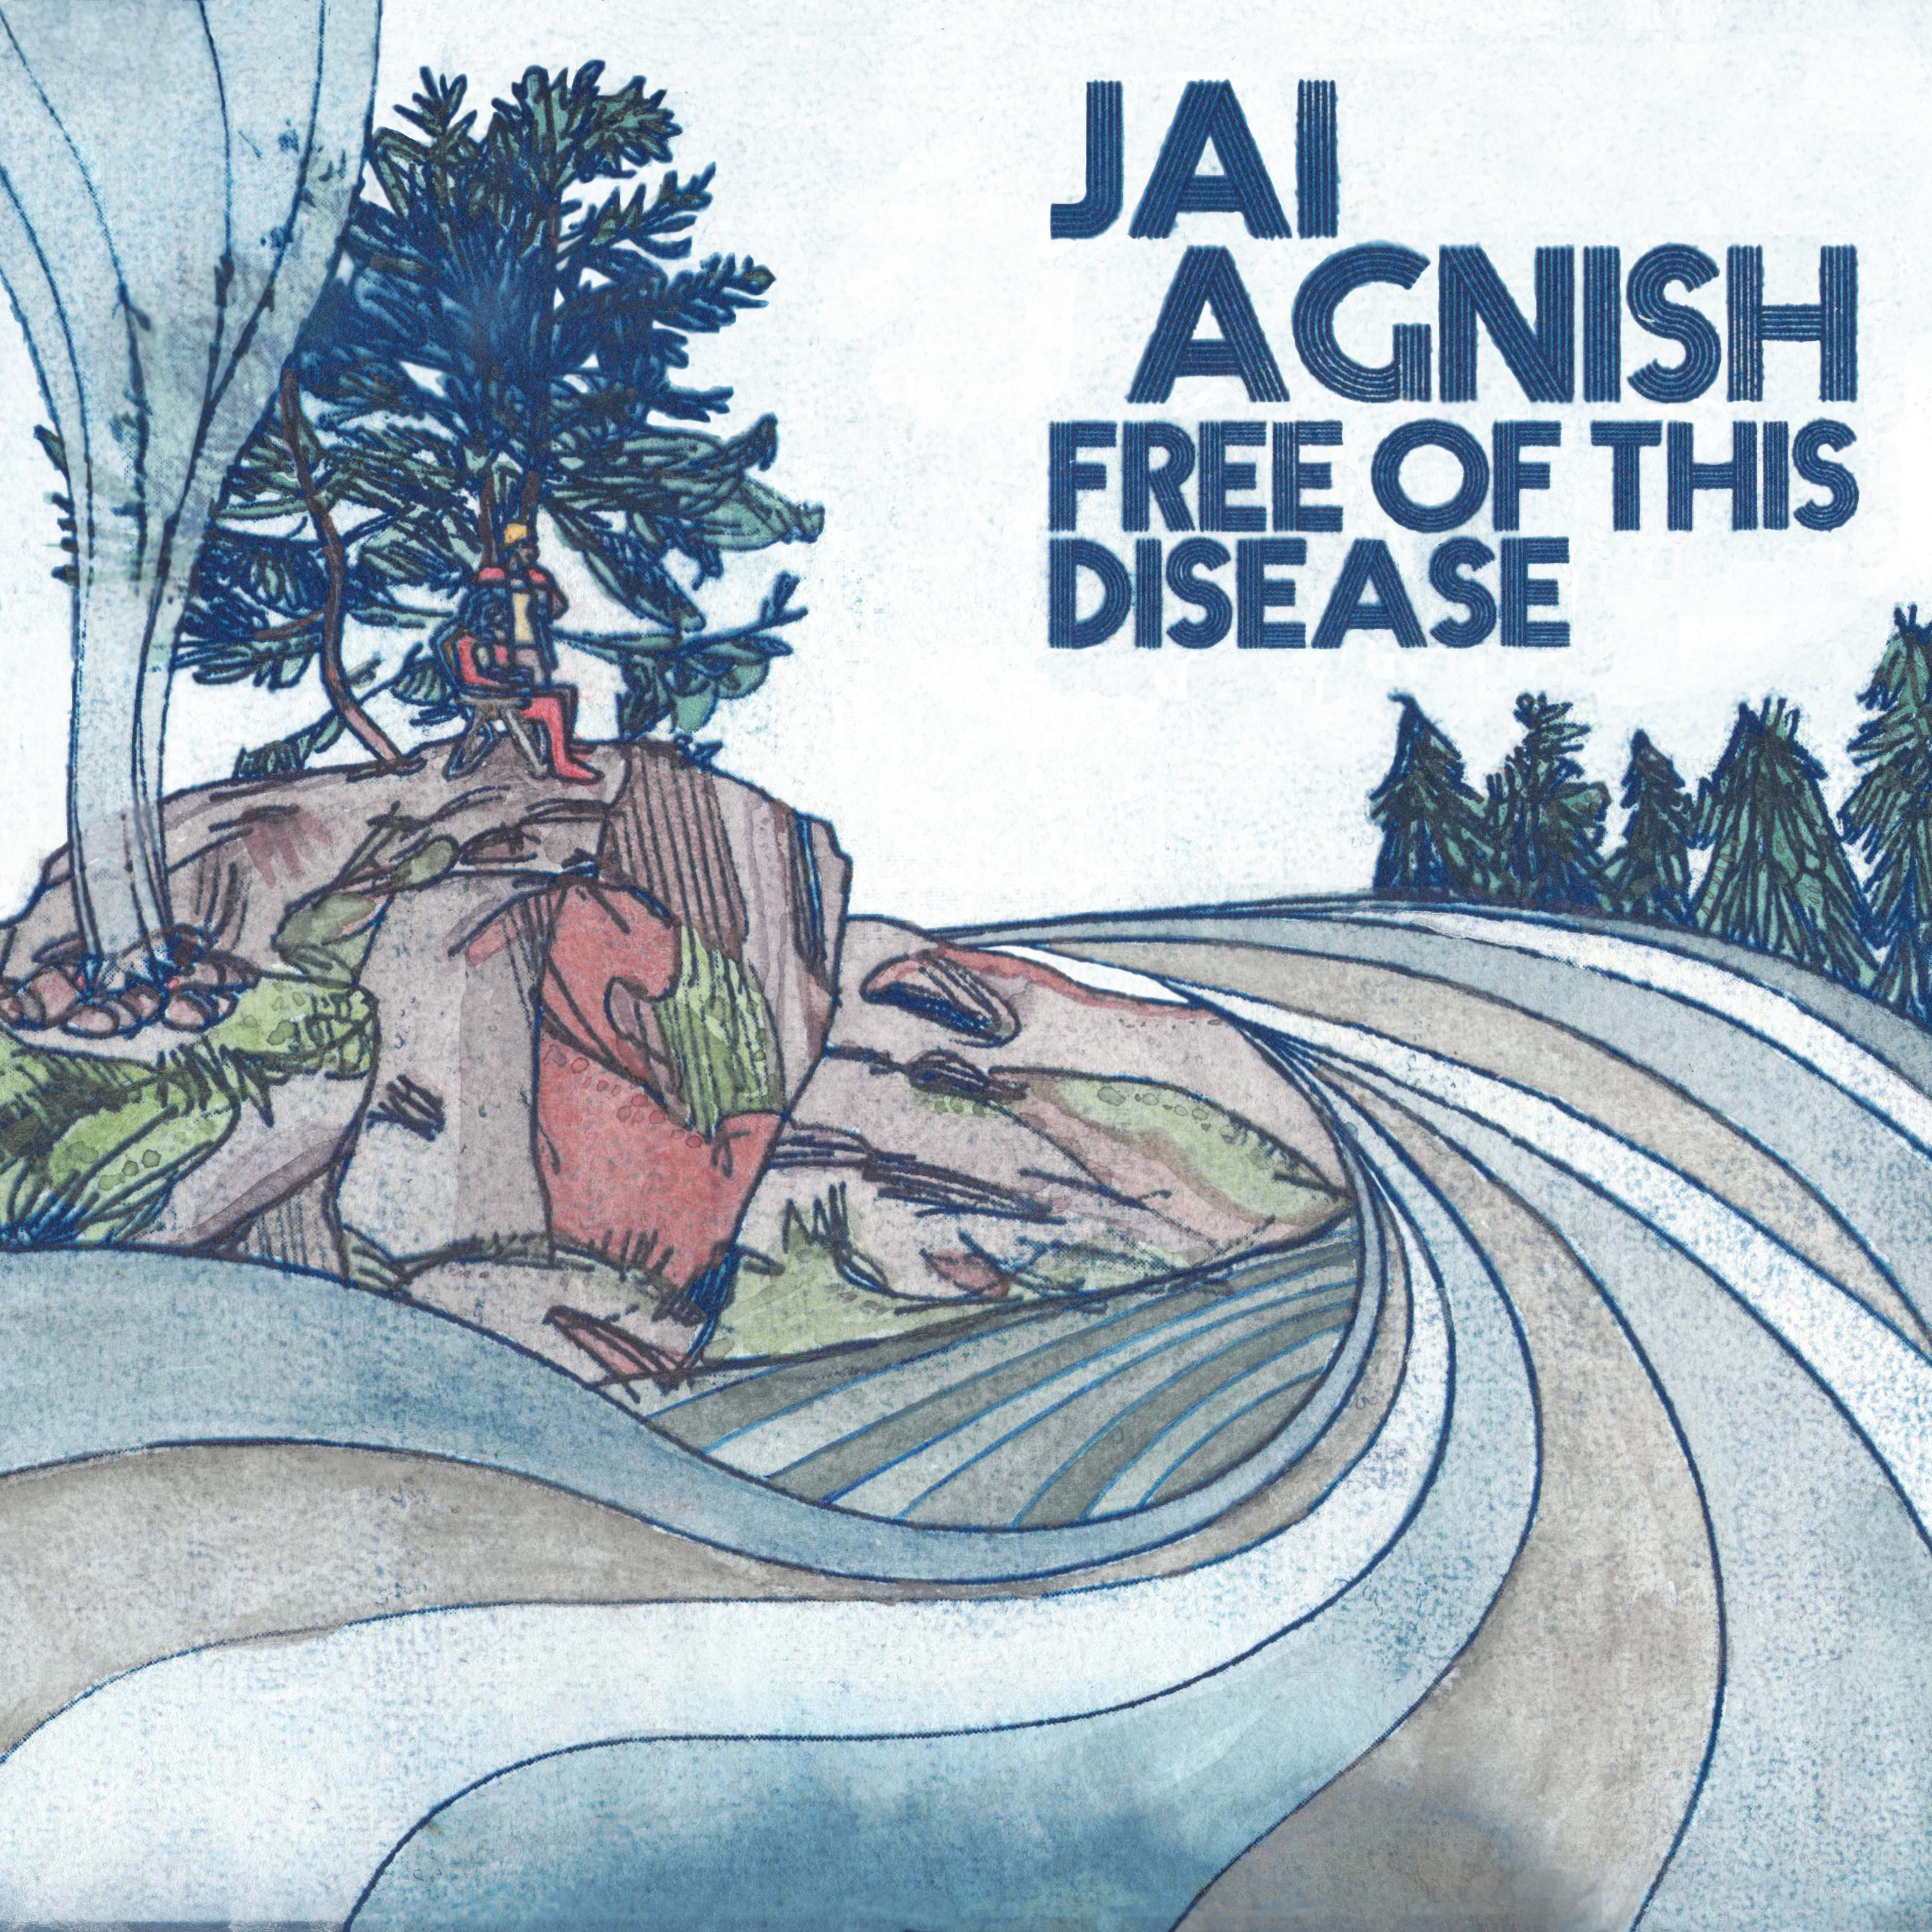 Jai Agnish - "Free of This Disease" cover art by John Ringhofer